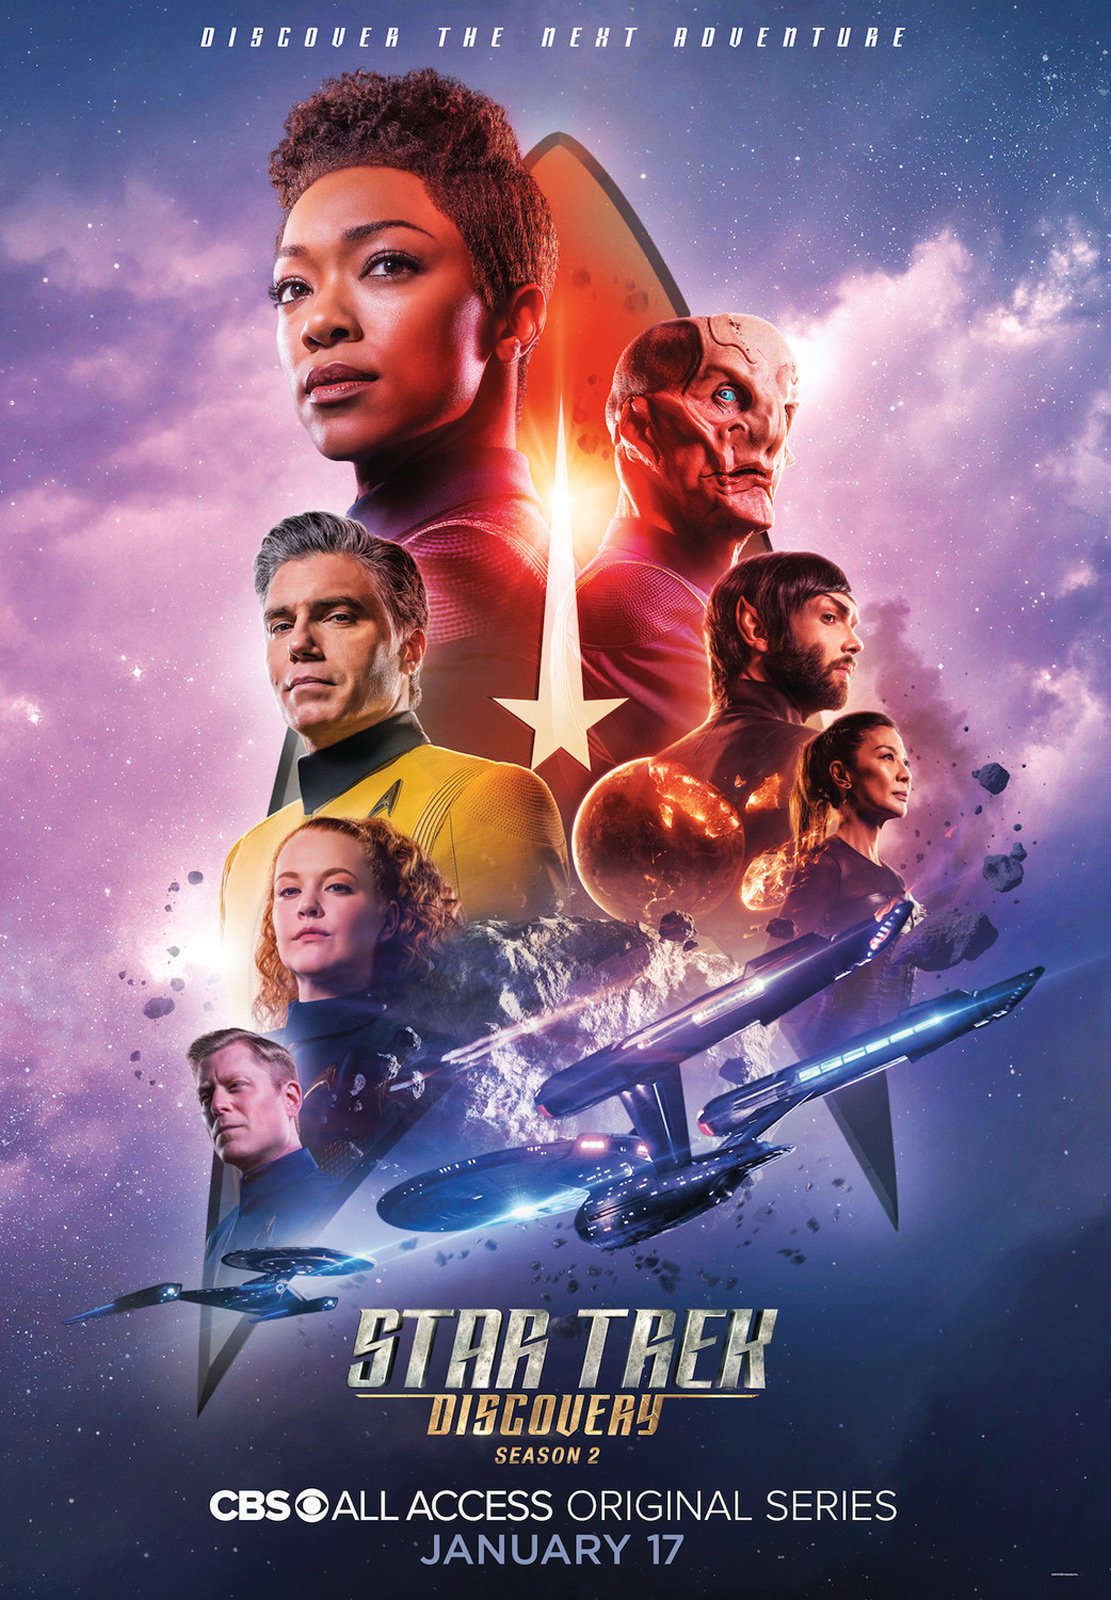 star trek discovery season 3 ships